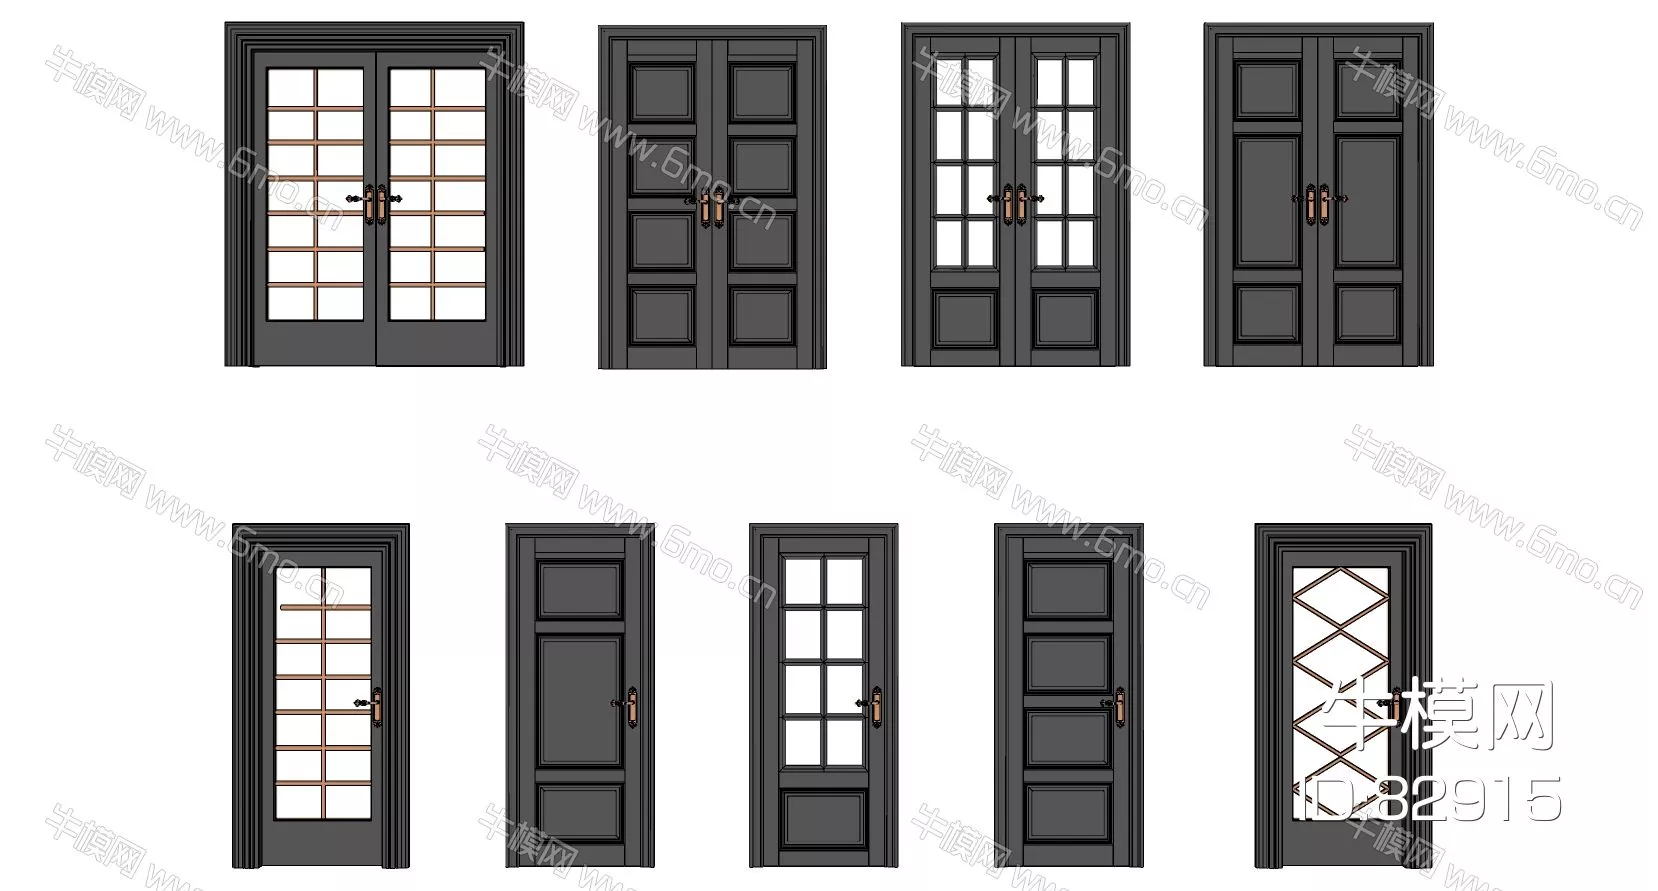 MODERN DOOR AND WINDOWS - SKETCHUP 3D MODEL - ENSCAPE - 82915